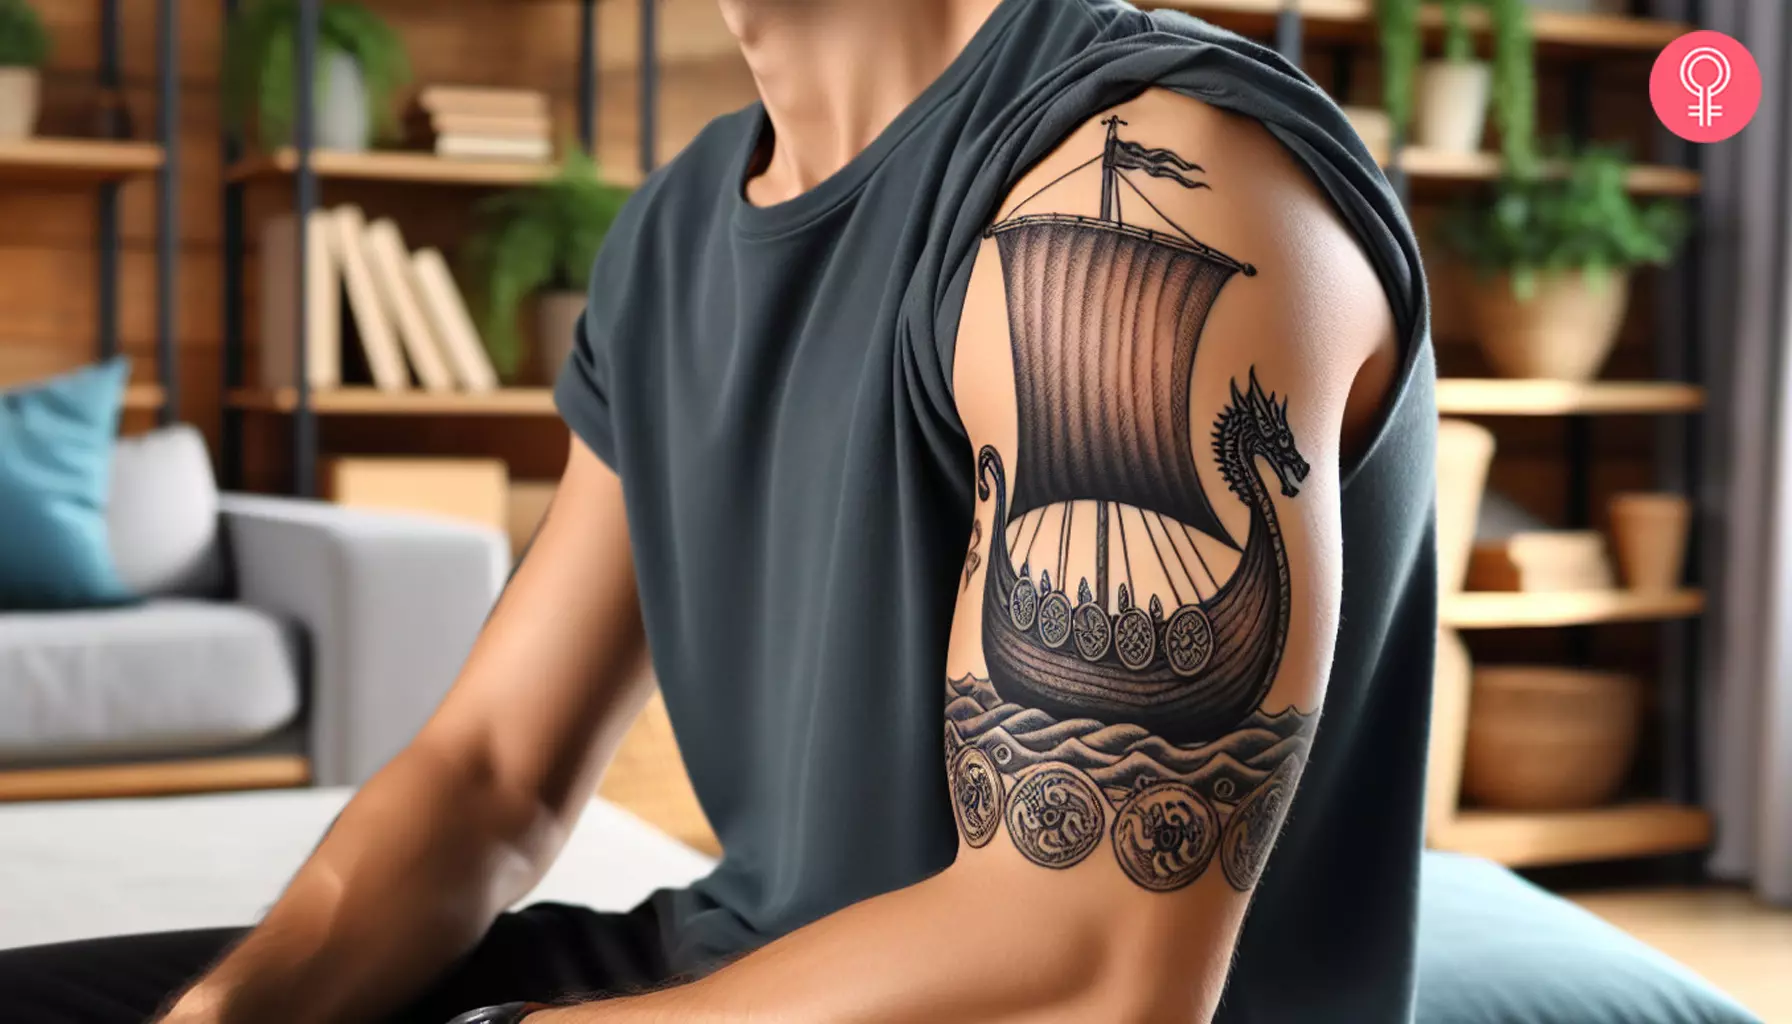 A Viking ship tattoo on the upper arm